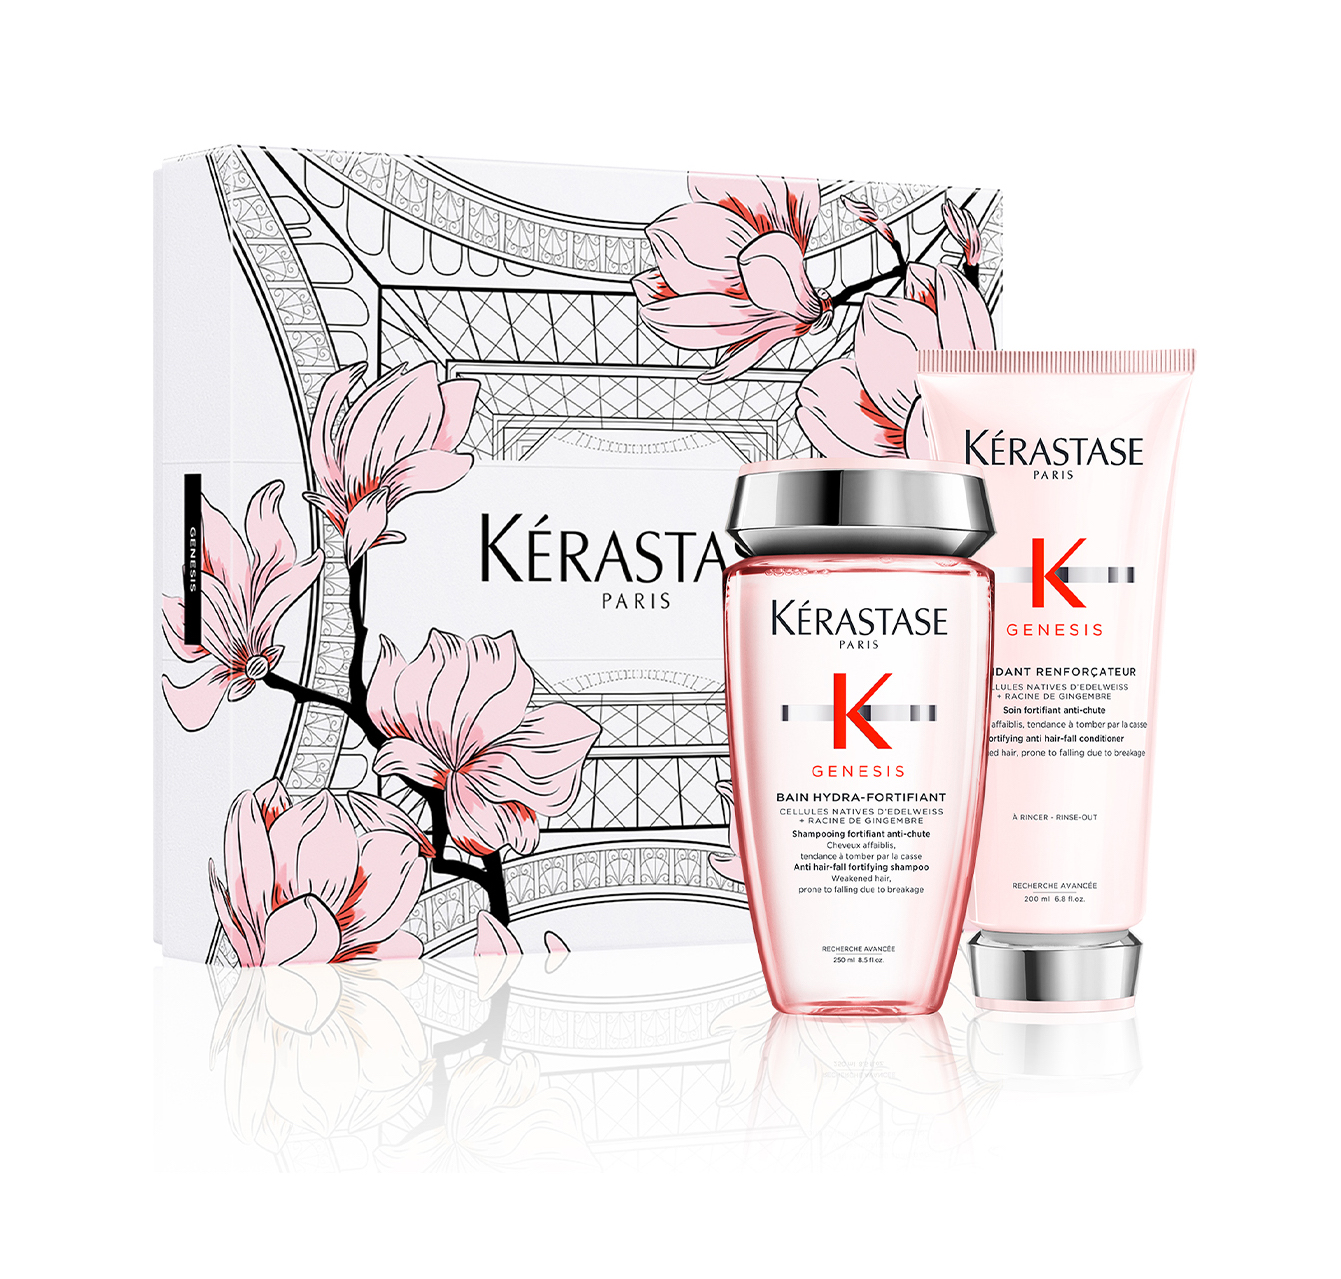 Discover the new Kérastase boxes for Spring!